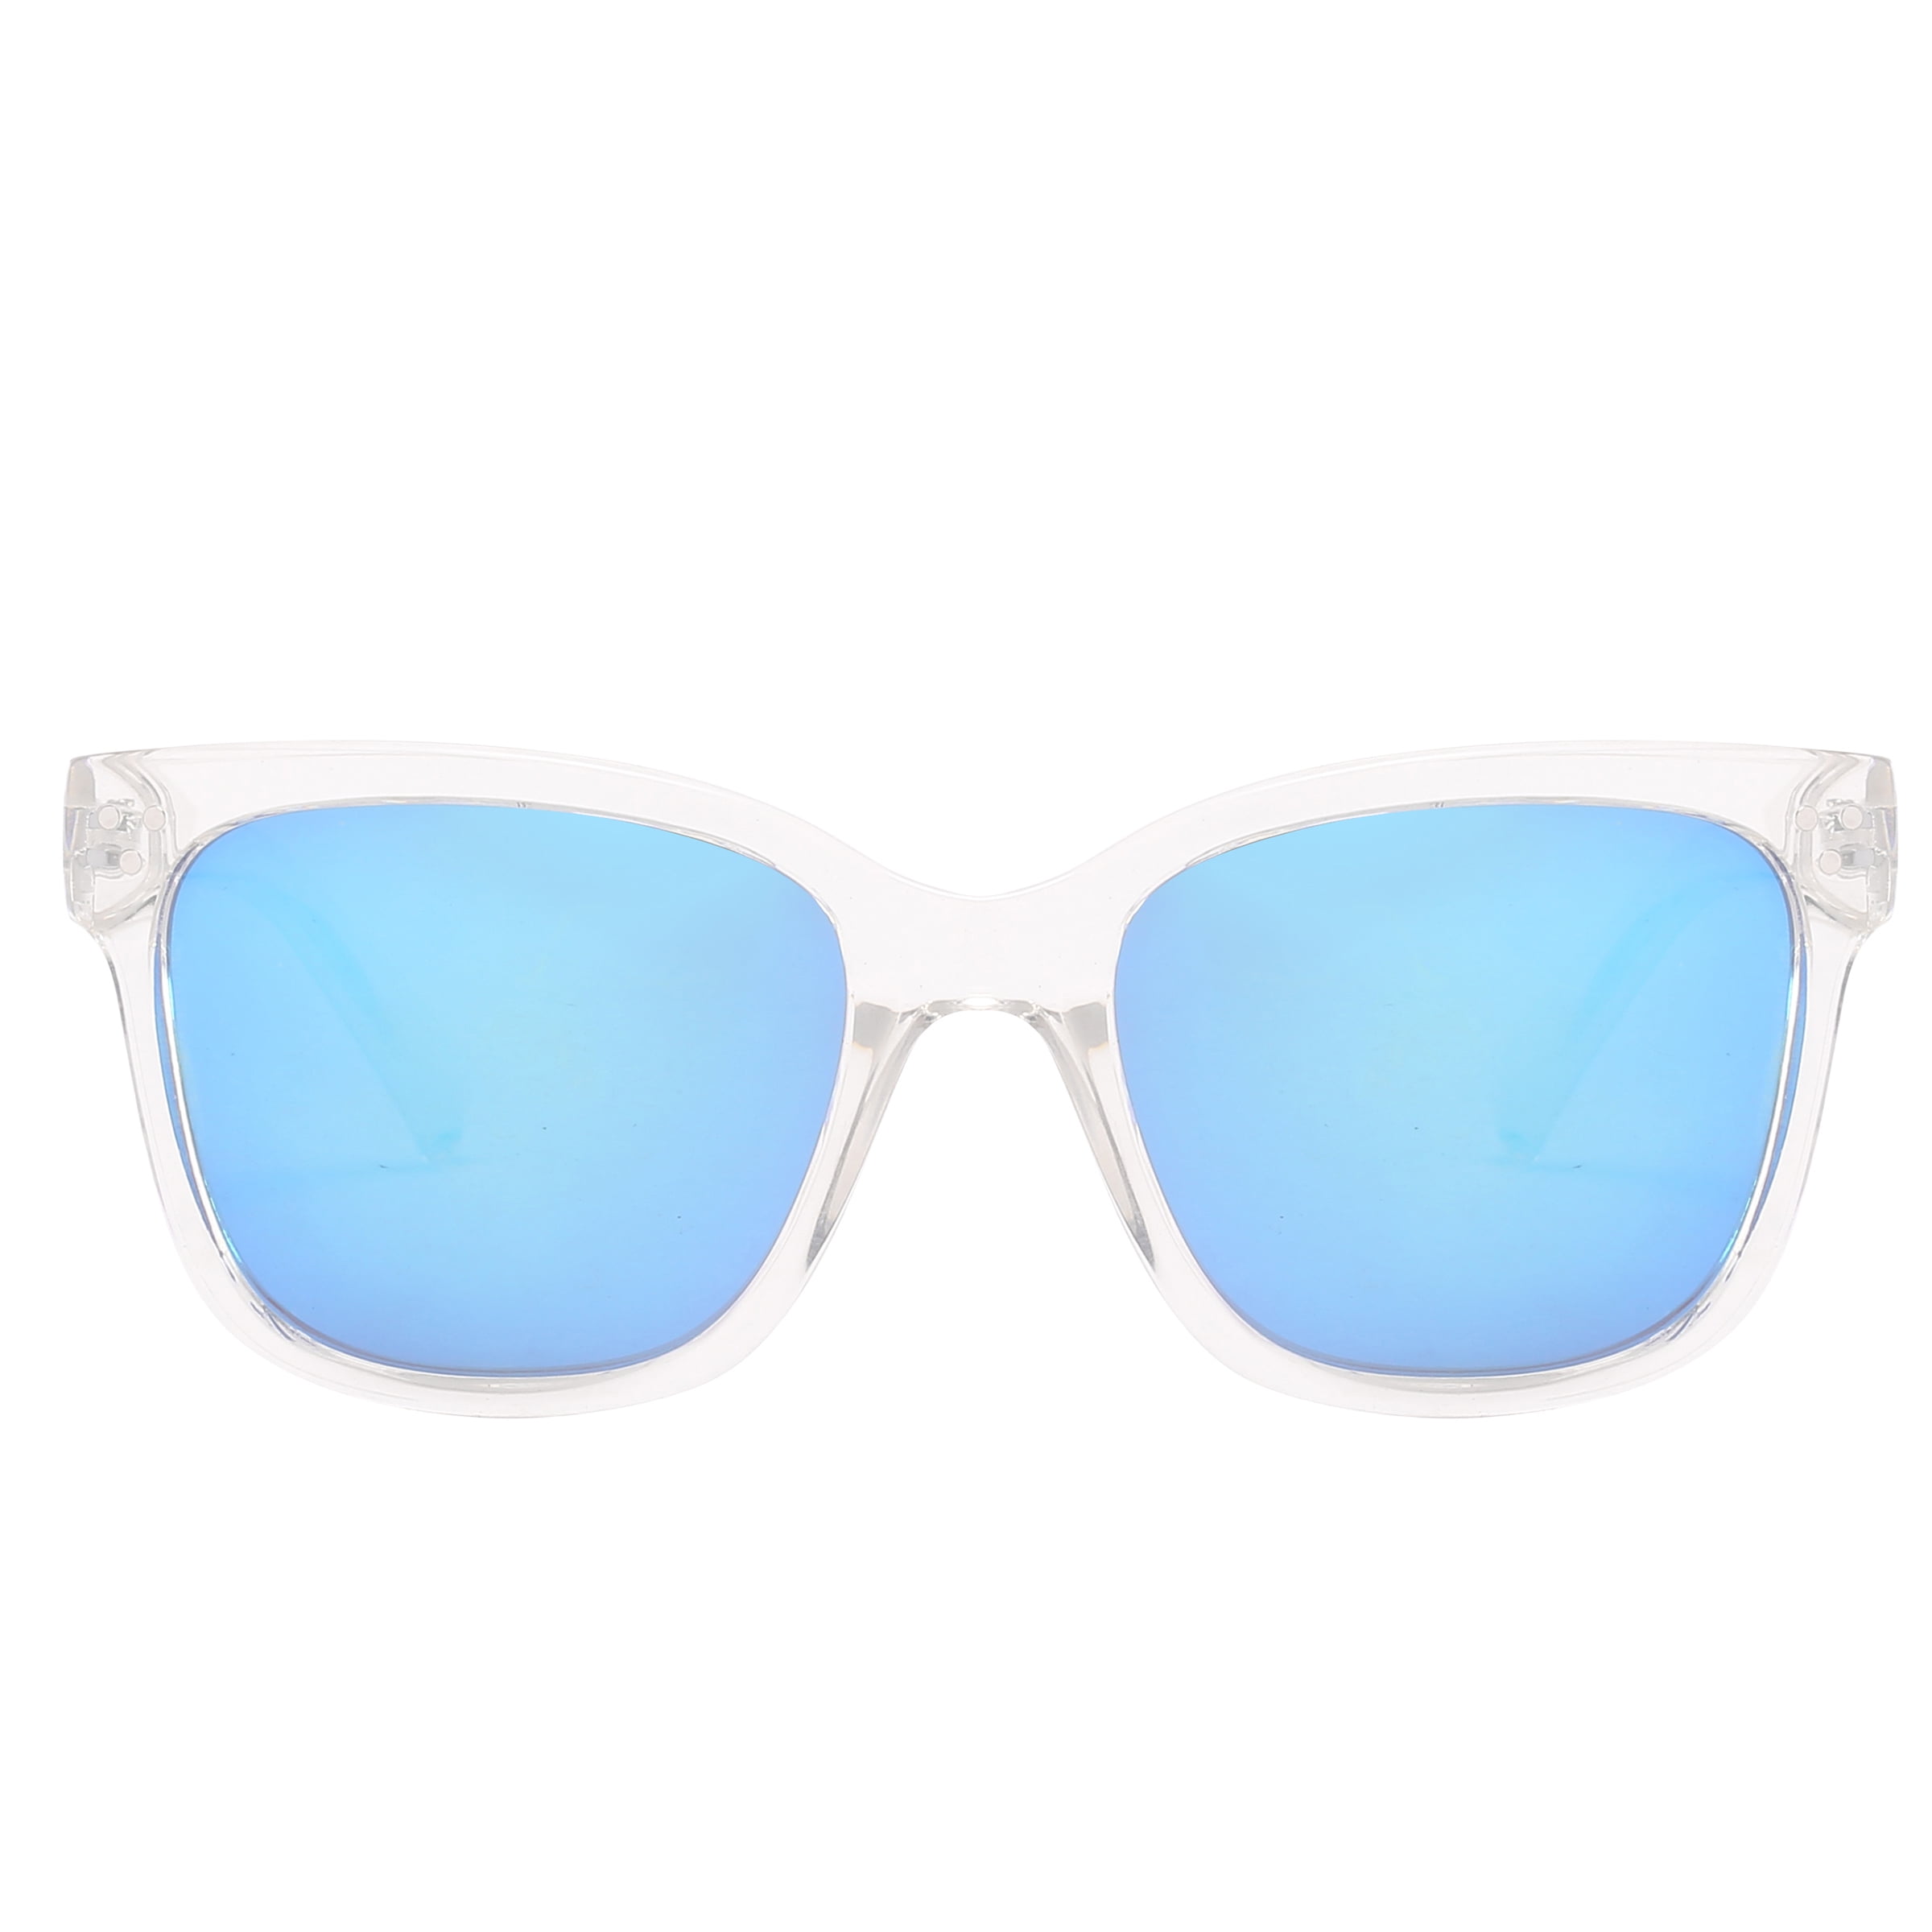 Piranha Eyewear Nova Eco-Pact Clear Unisex Sunglasses with Blue